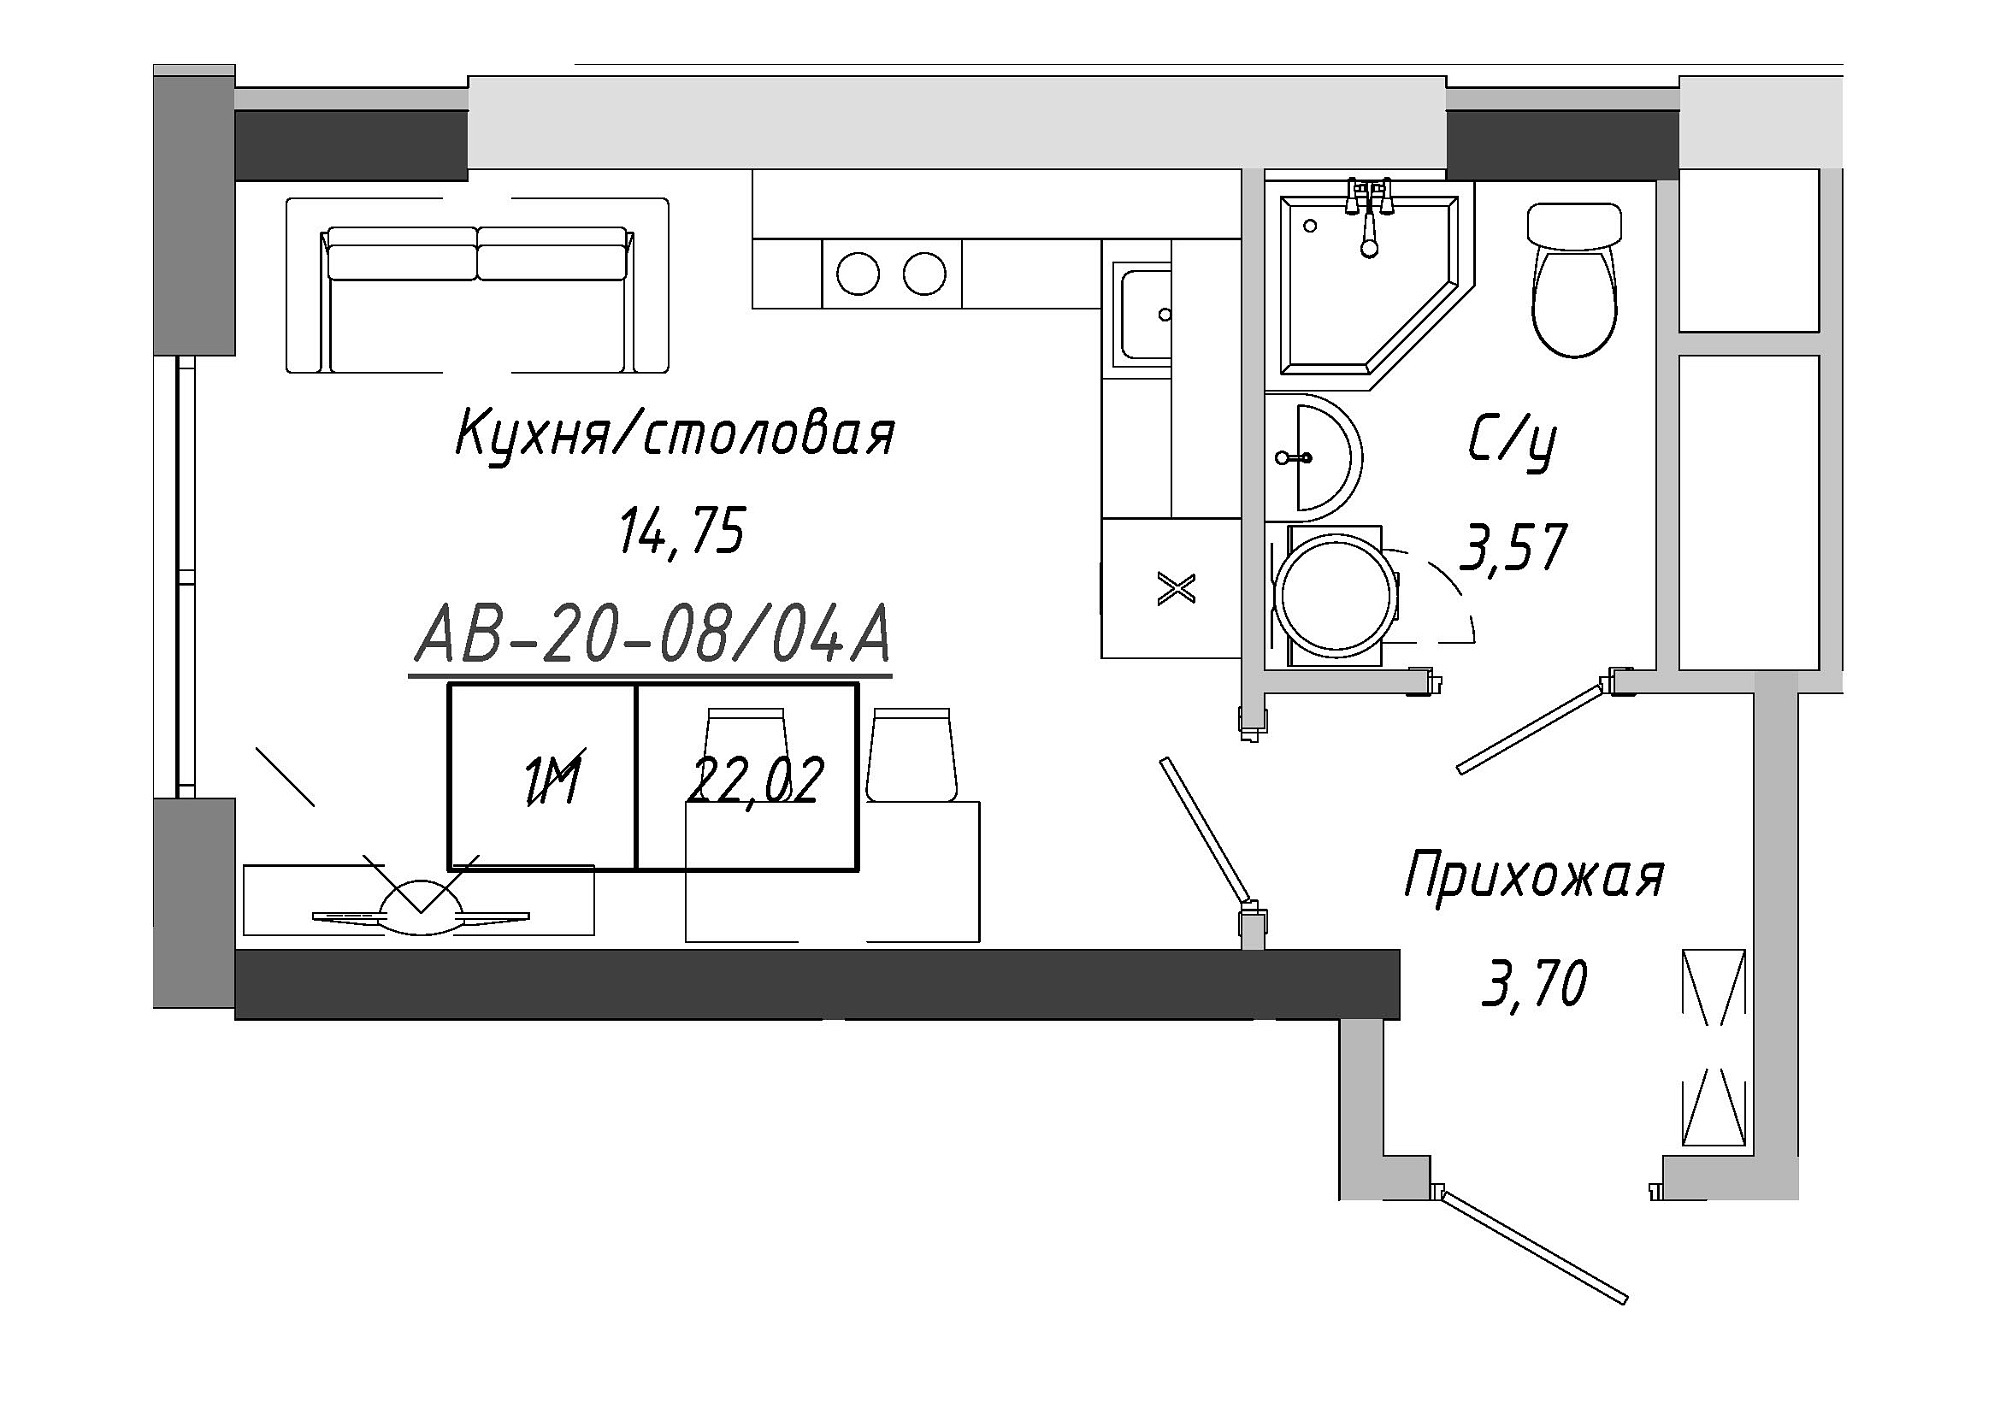 Planning Smart flats area 21.3m2, AB-20-08/0004а.